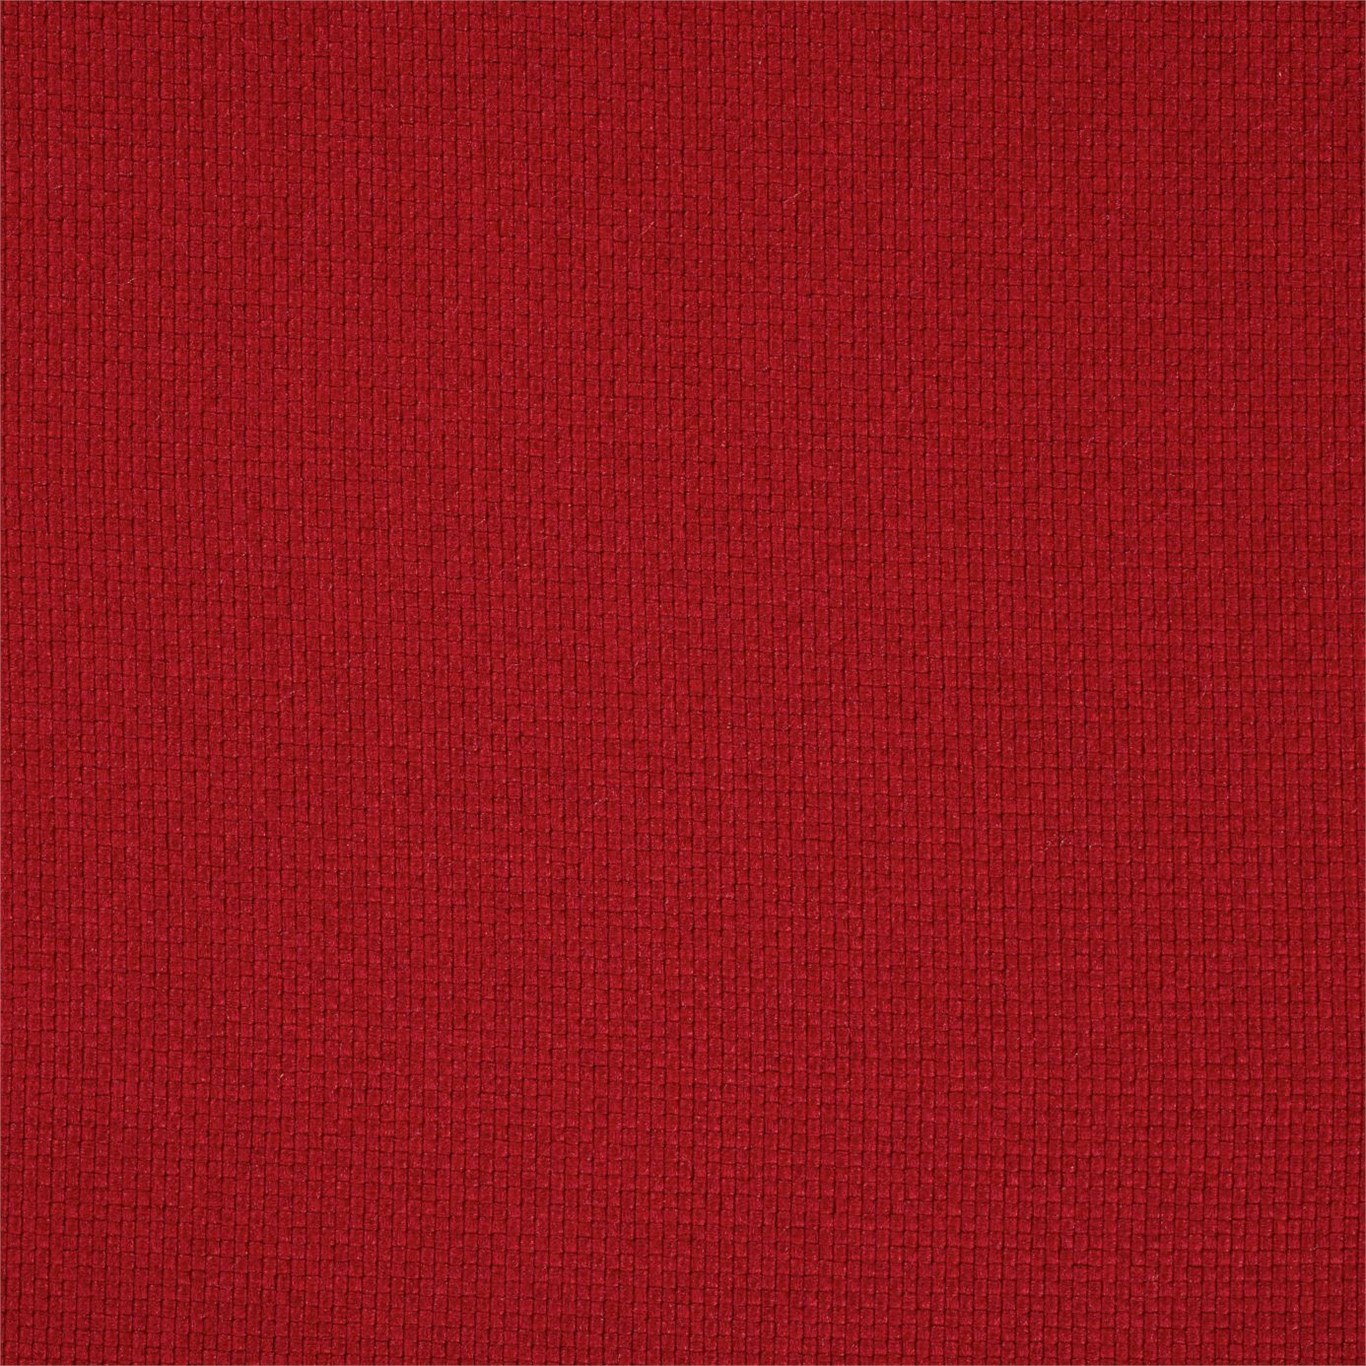 Красная ткань текстура бесшовная